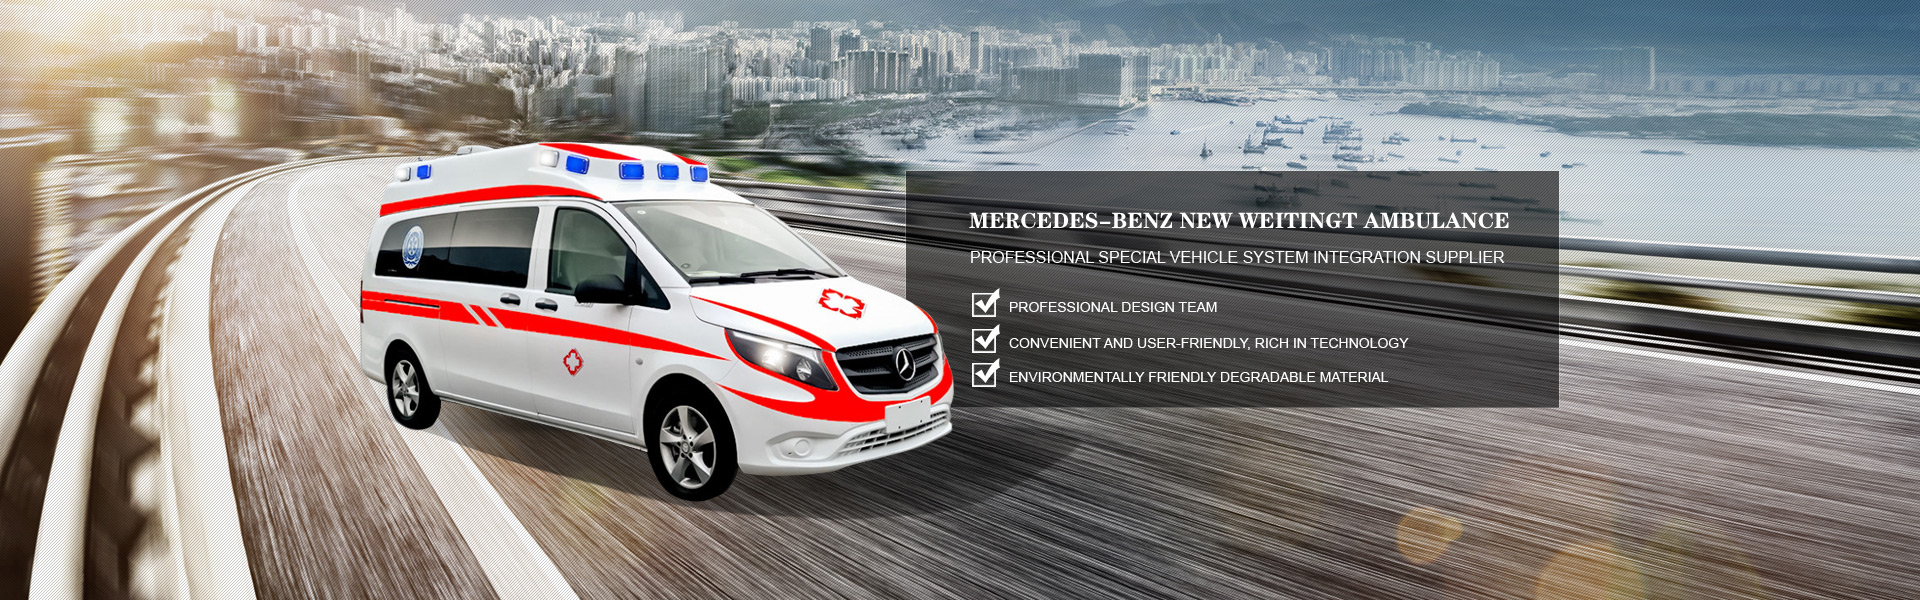 Mercedes-Benz new Weiting ambulance